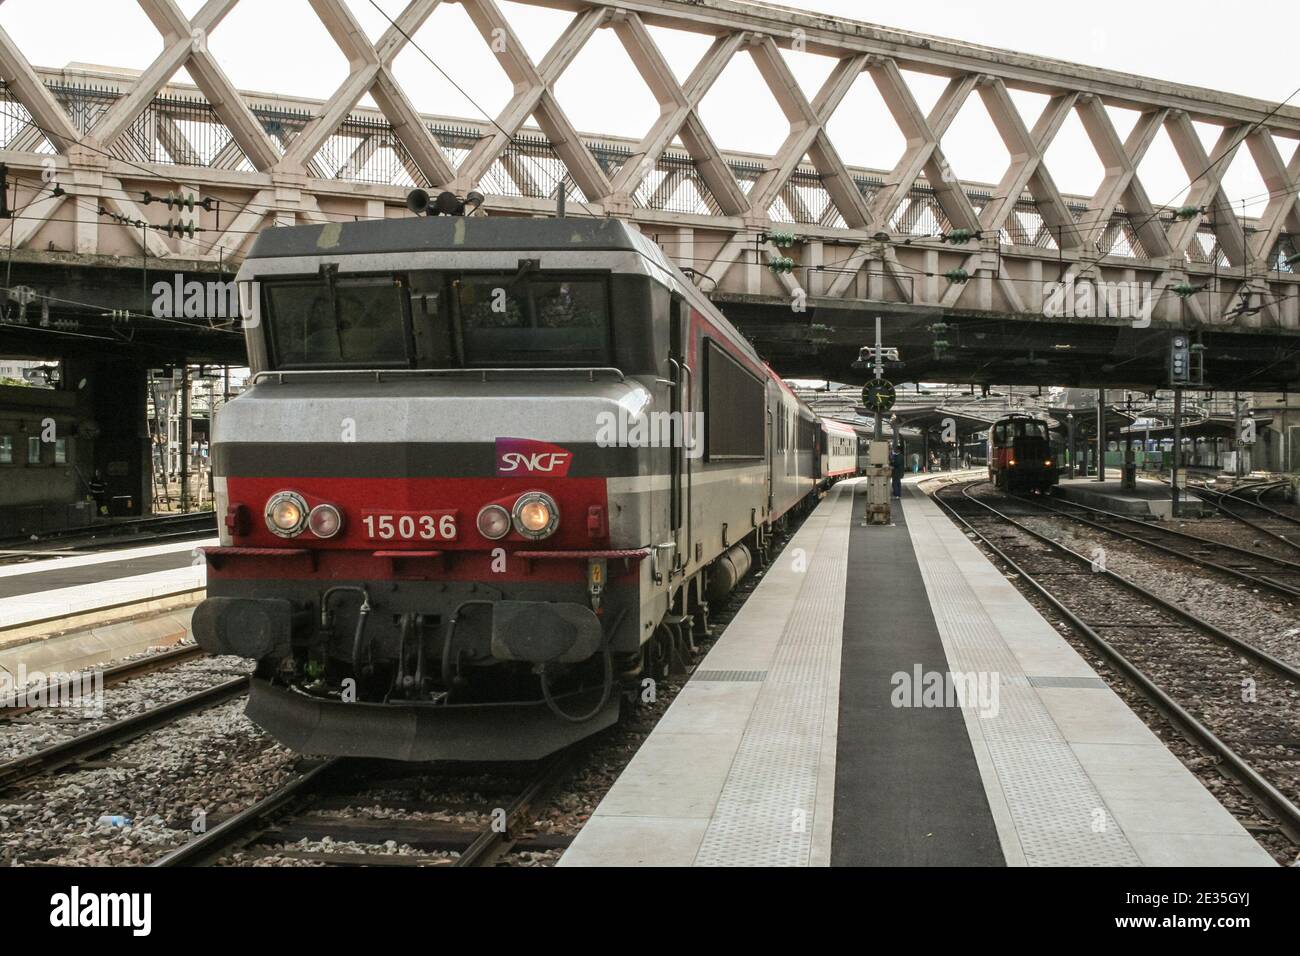 PARIS, FRANCE - AUGUST 11, 2006: Passenger Train, an overnight Paris Vienna ready in Paris Gare de l'Est train station, belonging to SNCF company. Thi Stock Photo